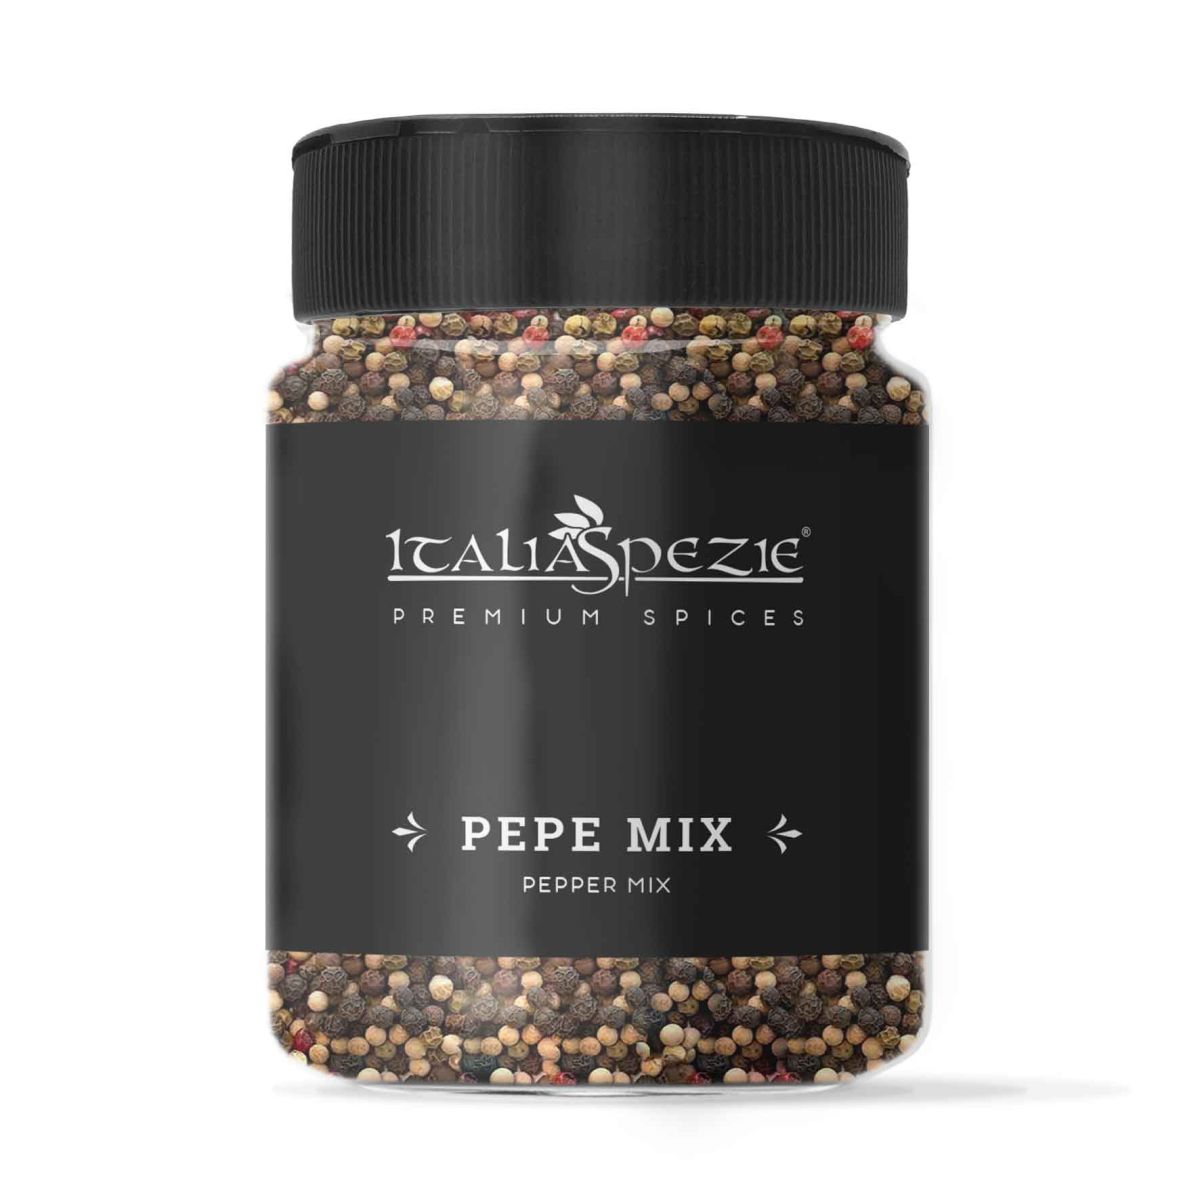 Pepe-mix